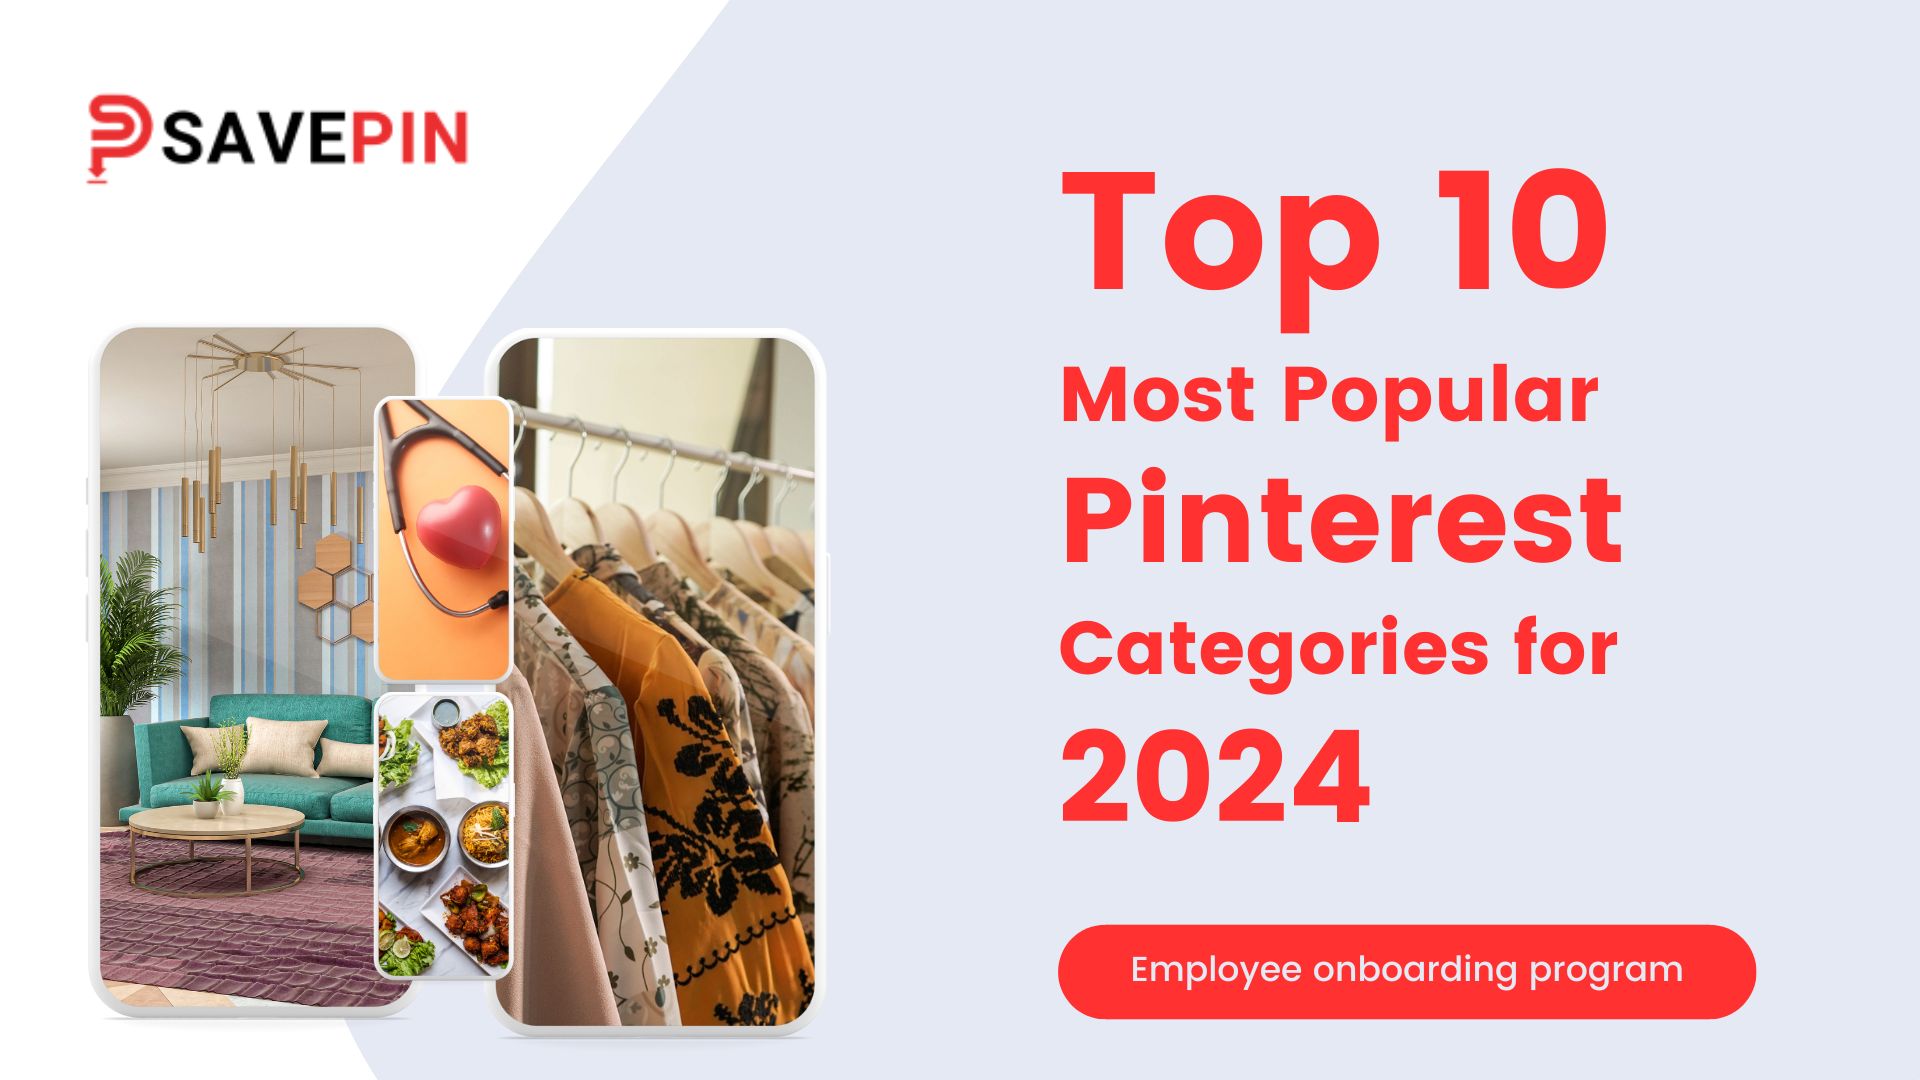 Top 10 Most Popular Pinterest Categories for 2024